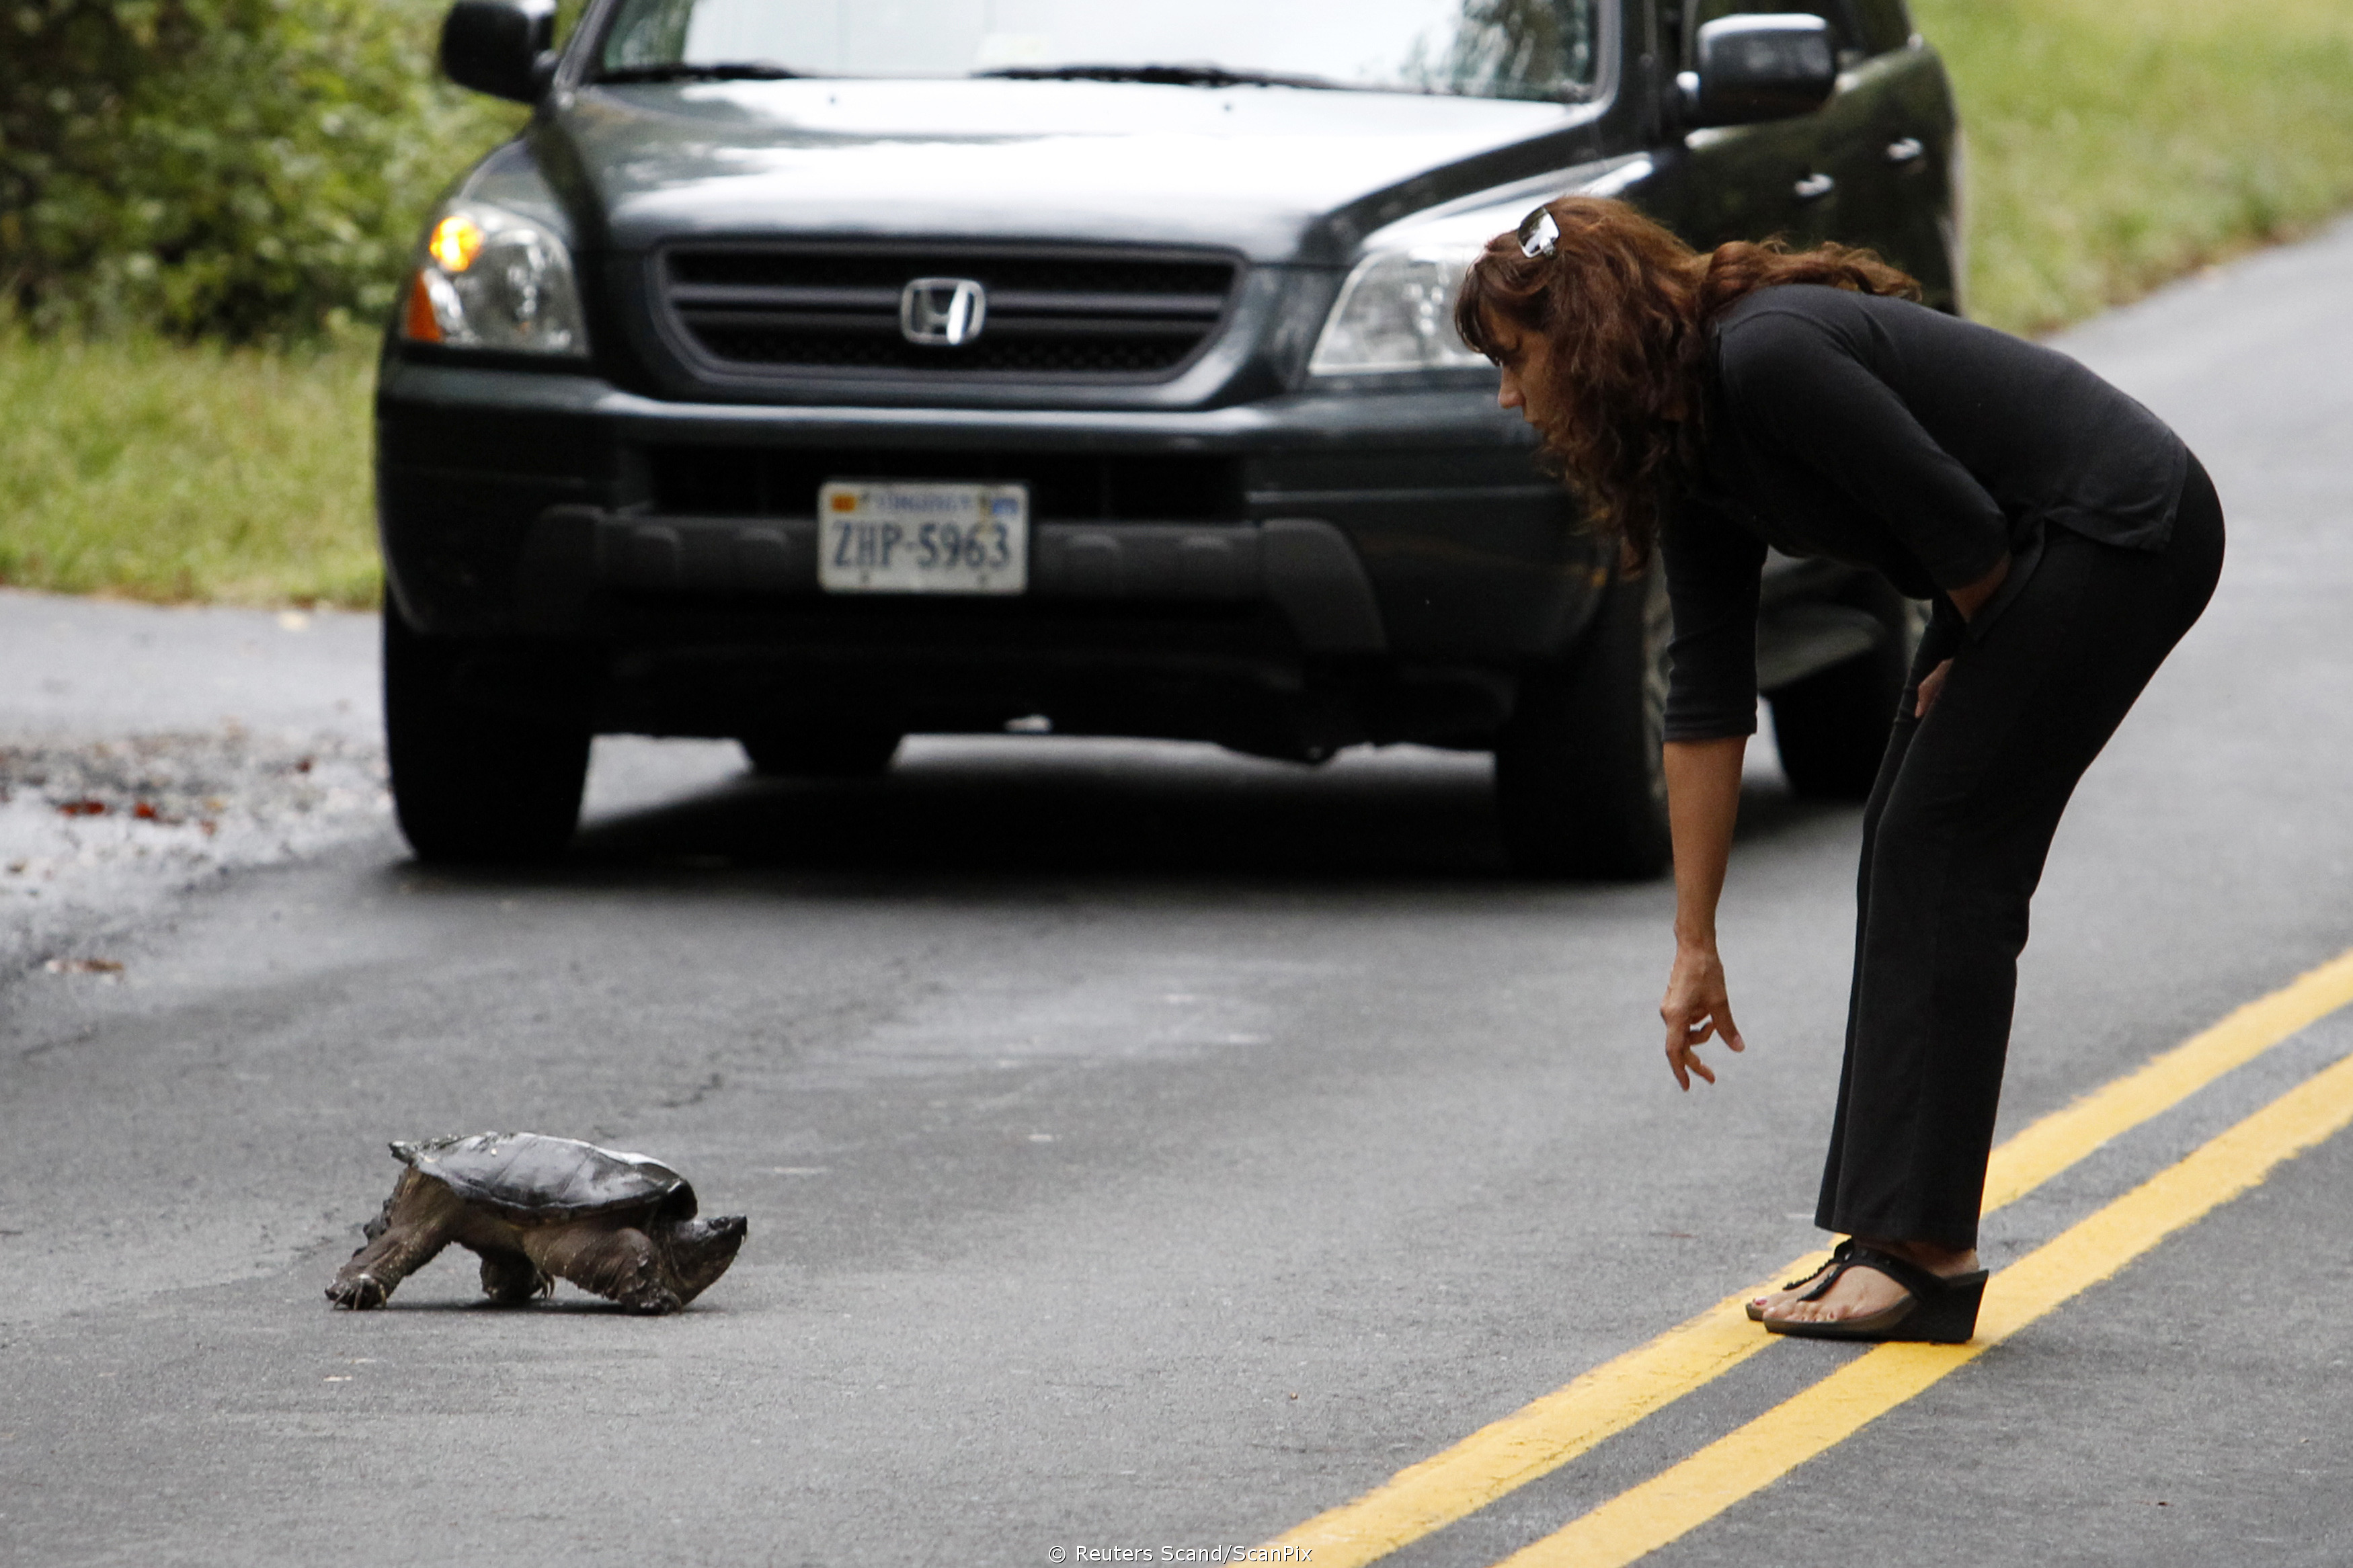 5 случаев на дорогах. Животные на дороге. Животные переходят дорогу. Раздавленные животные на дороге. Смешные ситуации.